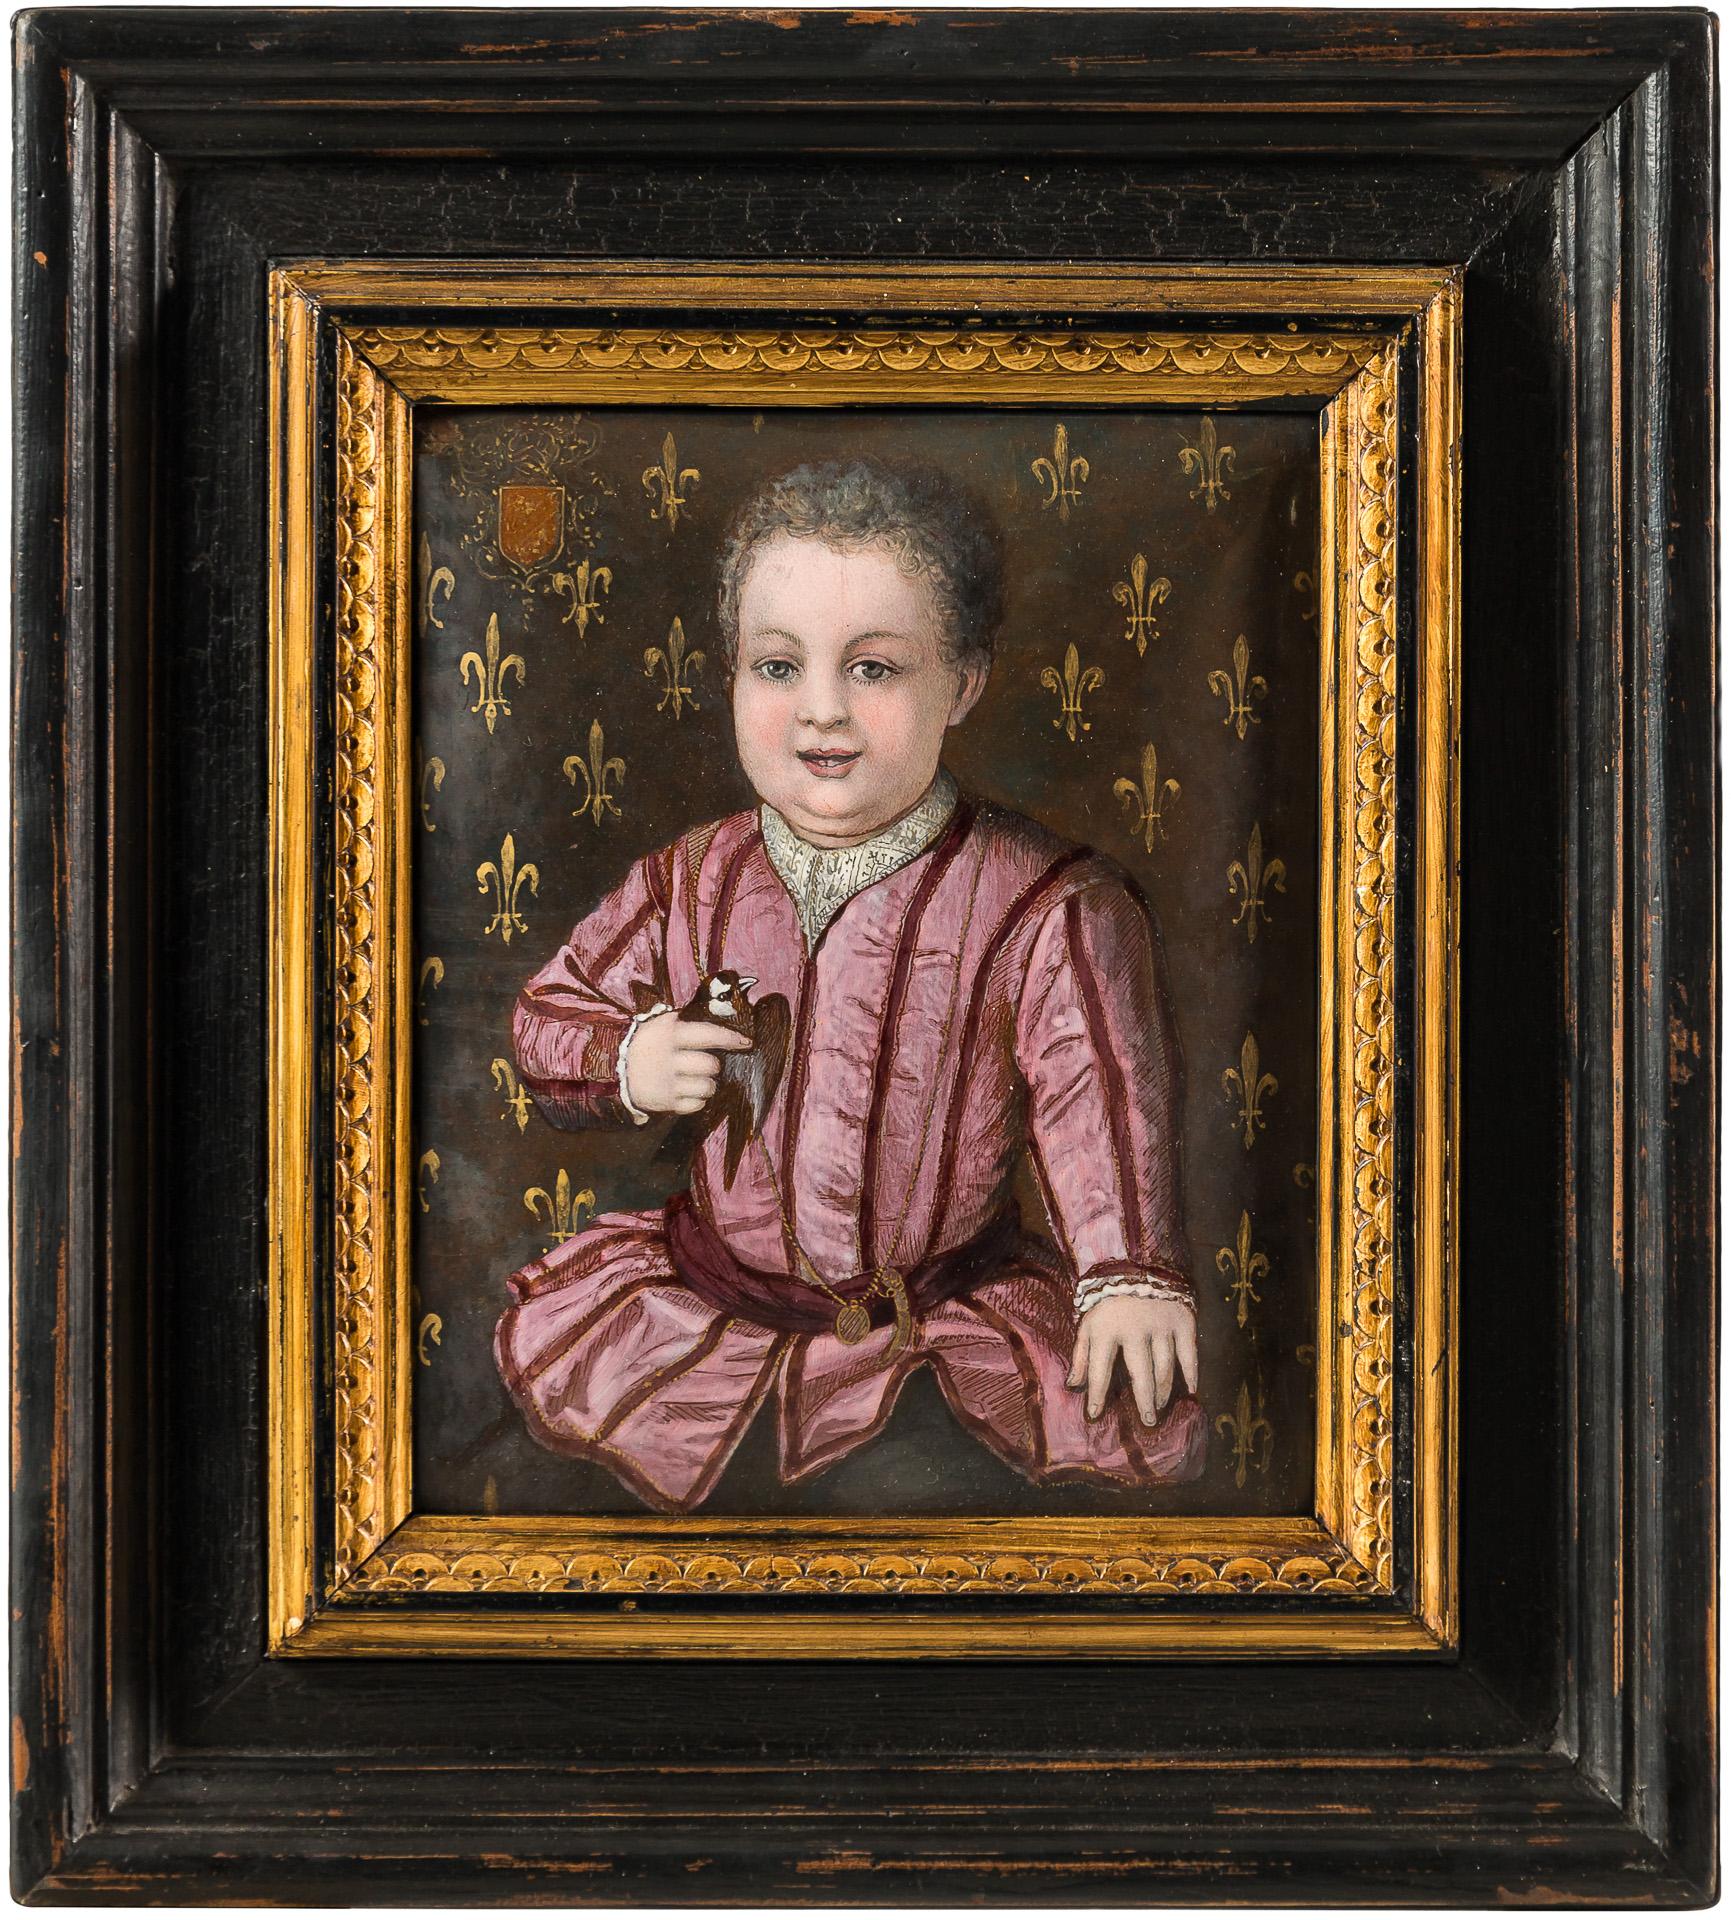 Unknown Portrait Painting - 16th century style Italian figurative painting - Noble portrait - Tempera enamel